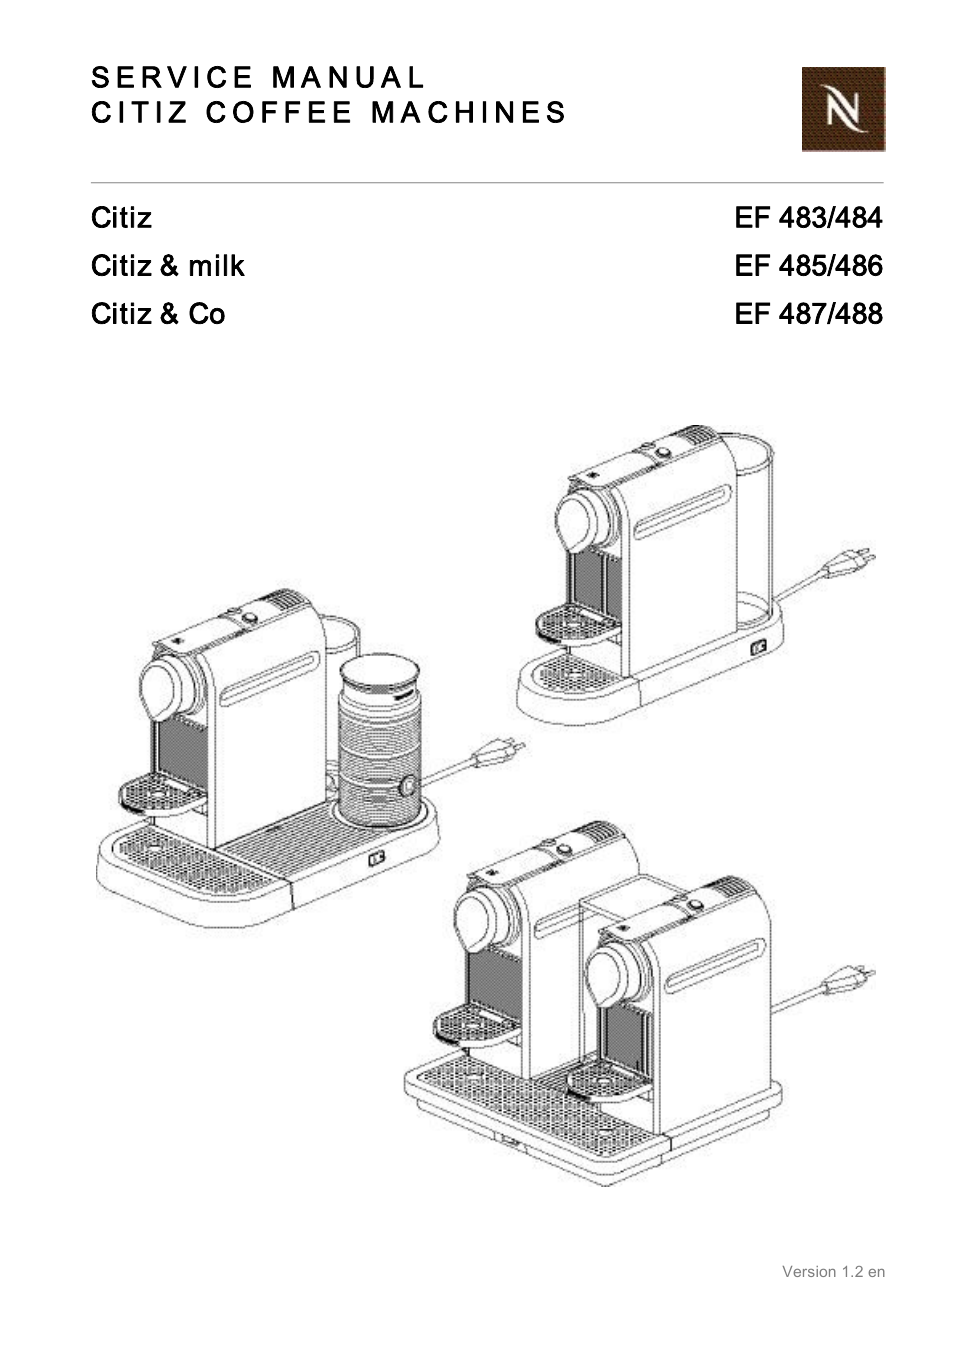 Nespresso Citiz & Co EF 488 User Manual | 158 pages | Also for: Citiz & Co  EF 487, Citiz & milk EF 486, Citiz & milk EF 485, CITIZ EF 484, CITIZ EF 483